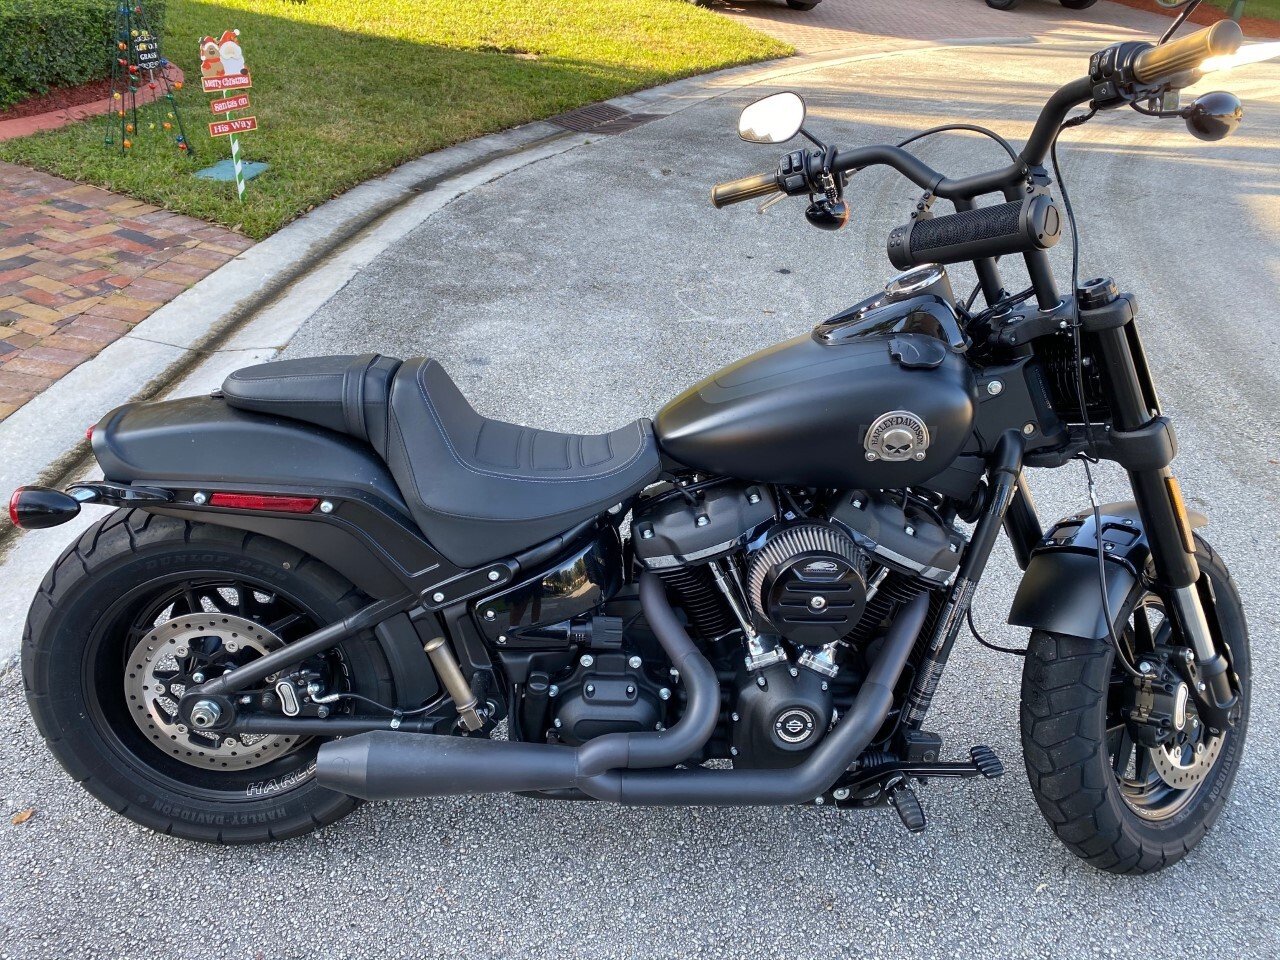 2020 Harley Davidson Softail Street Bob For Sale Near Cutler Bay Florida 33157 Motorcycles On Autotrader